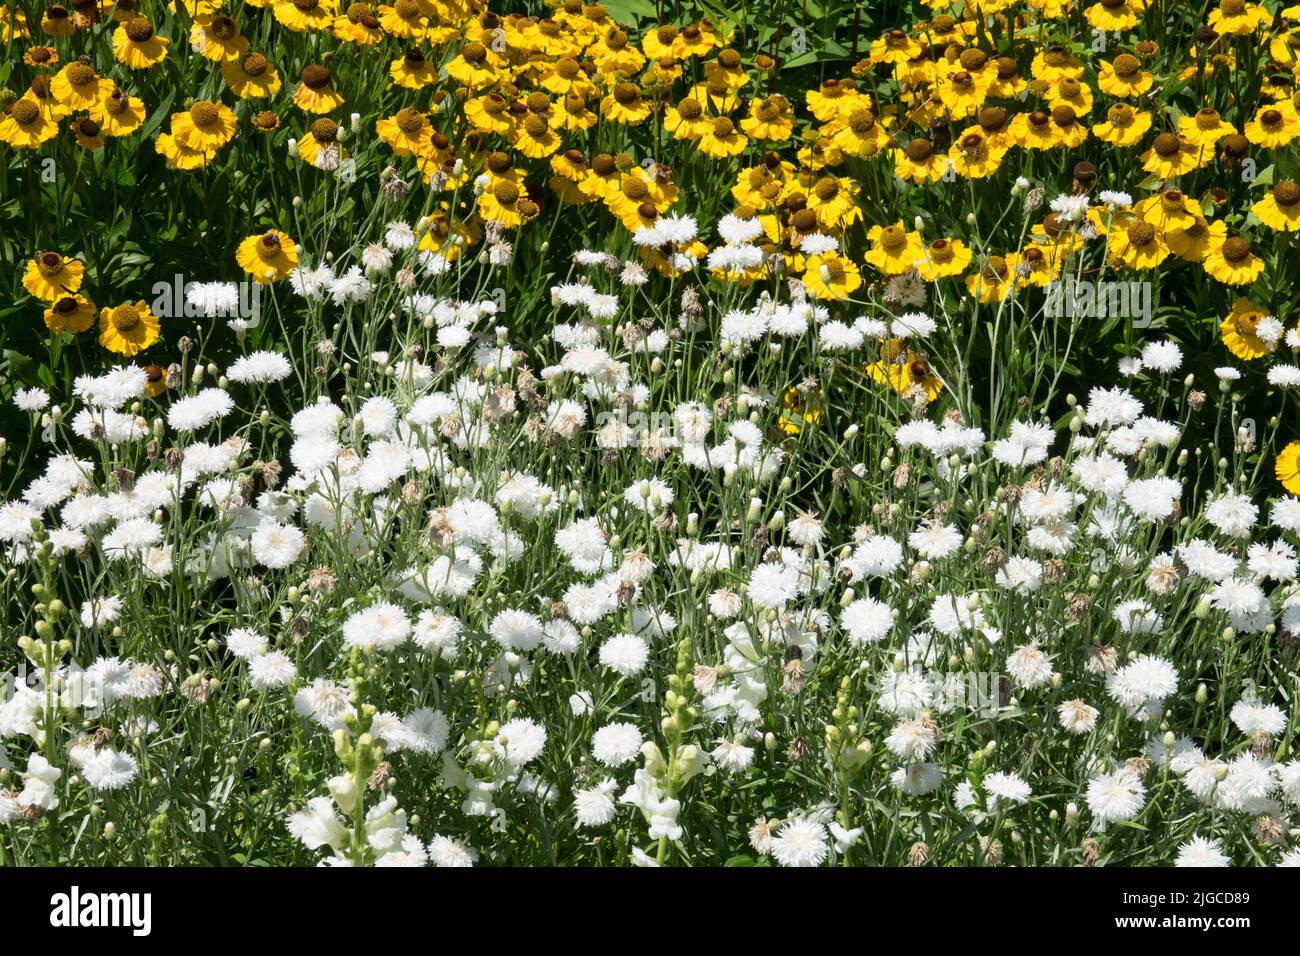 White yellow garden, Plants, Centaurea 'Snow Man', Helenium 'El Dorado', Centaurea, Helenium, Summer flower border Stock Photo